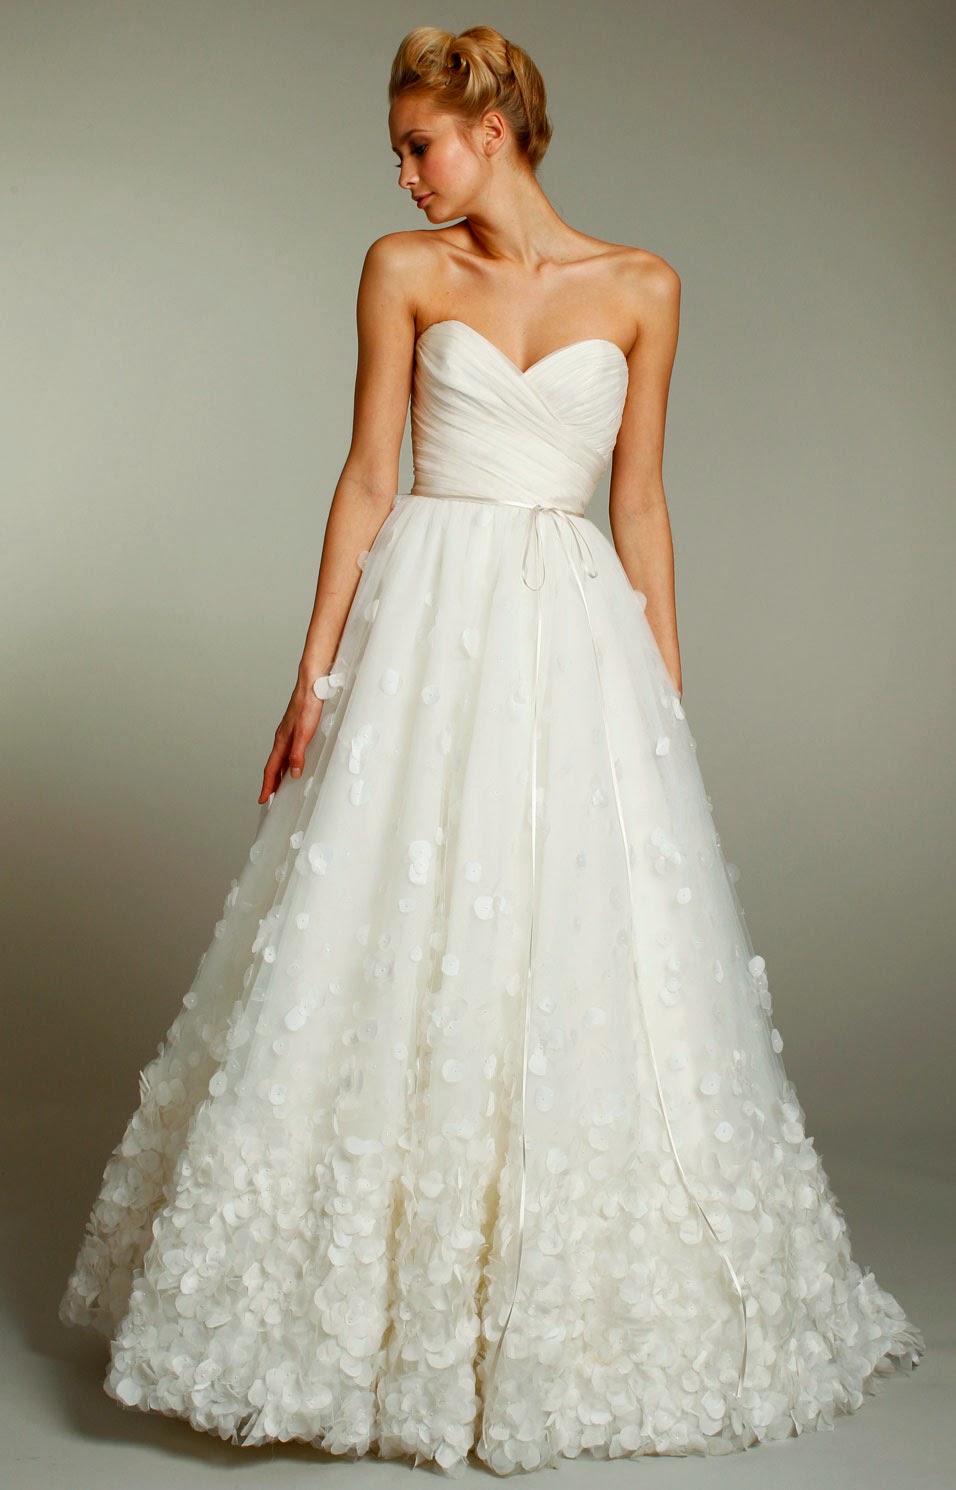 Cheap Ivory Wedding Dresses Under 100 Dollars Design Ideas Photos HD